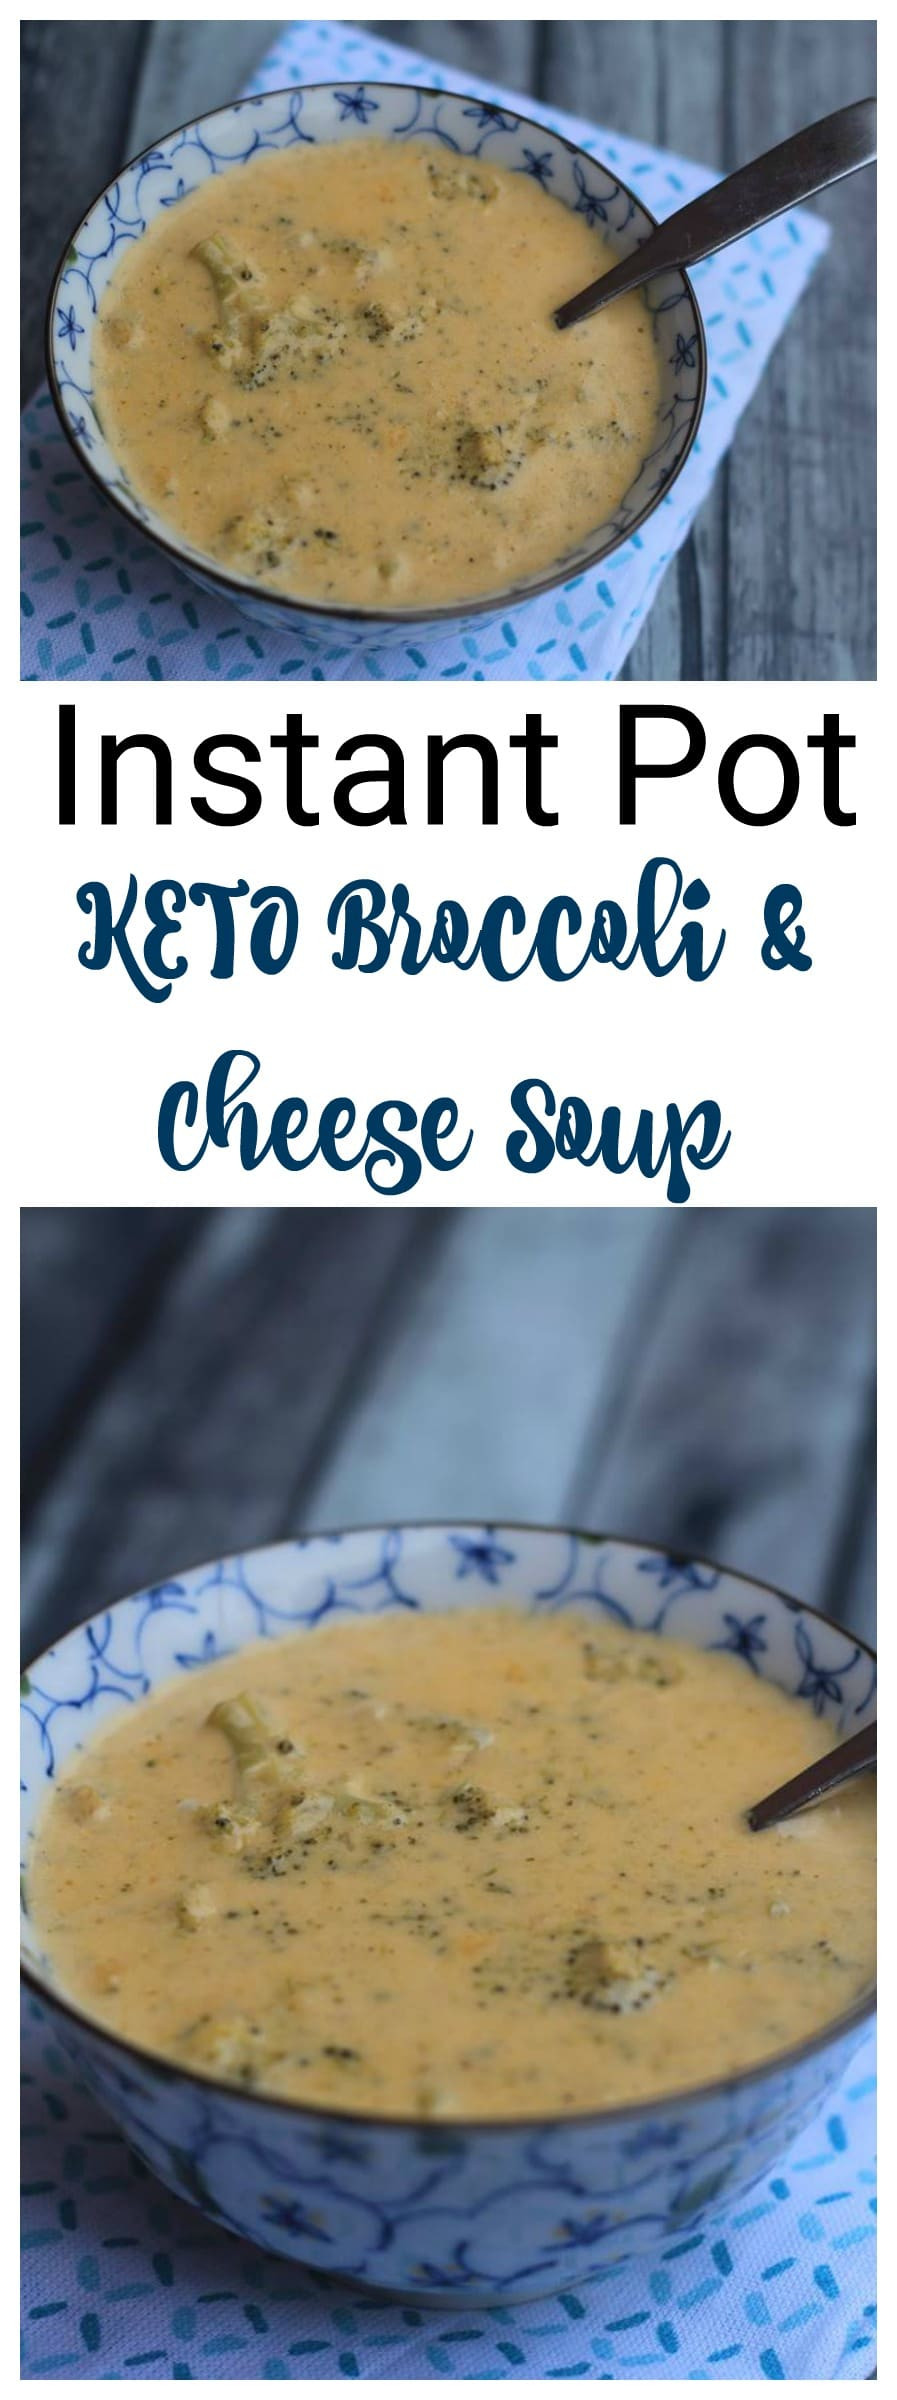 Instant Pot Keto Soup
 Instant Pot Broccoli & Cheese Soup Recipe Keto Low Carb